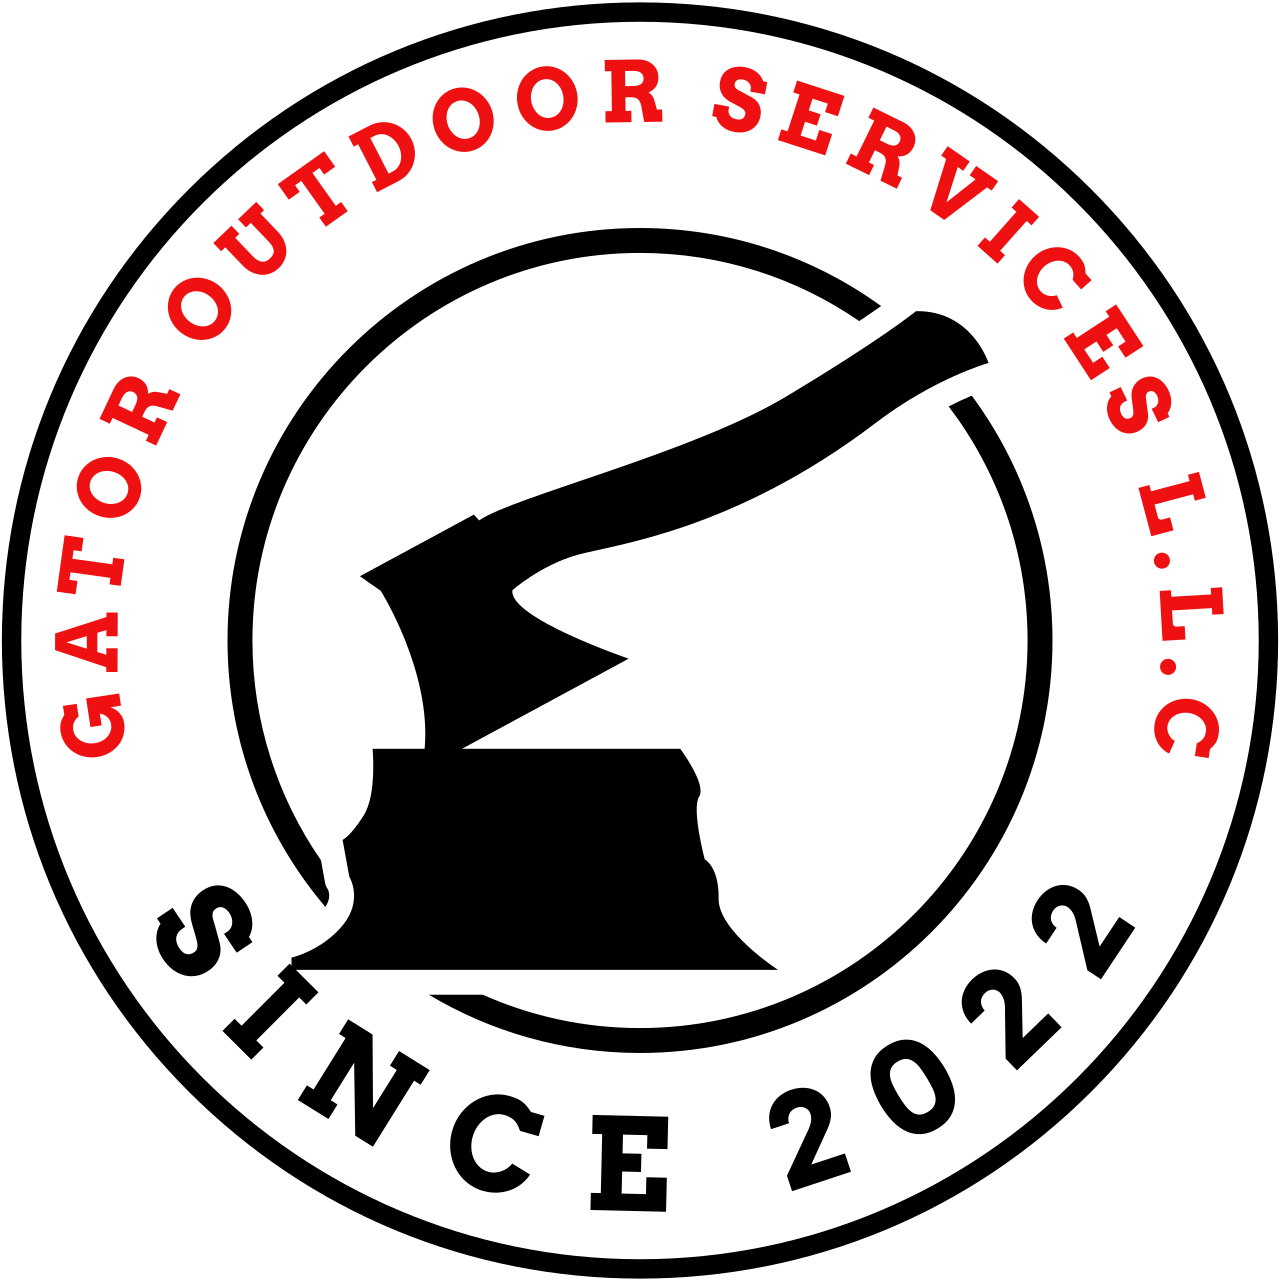 Gator Outdoor Services L.L.C's logo